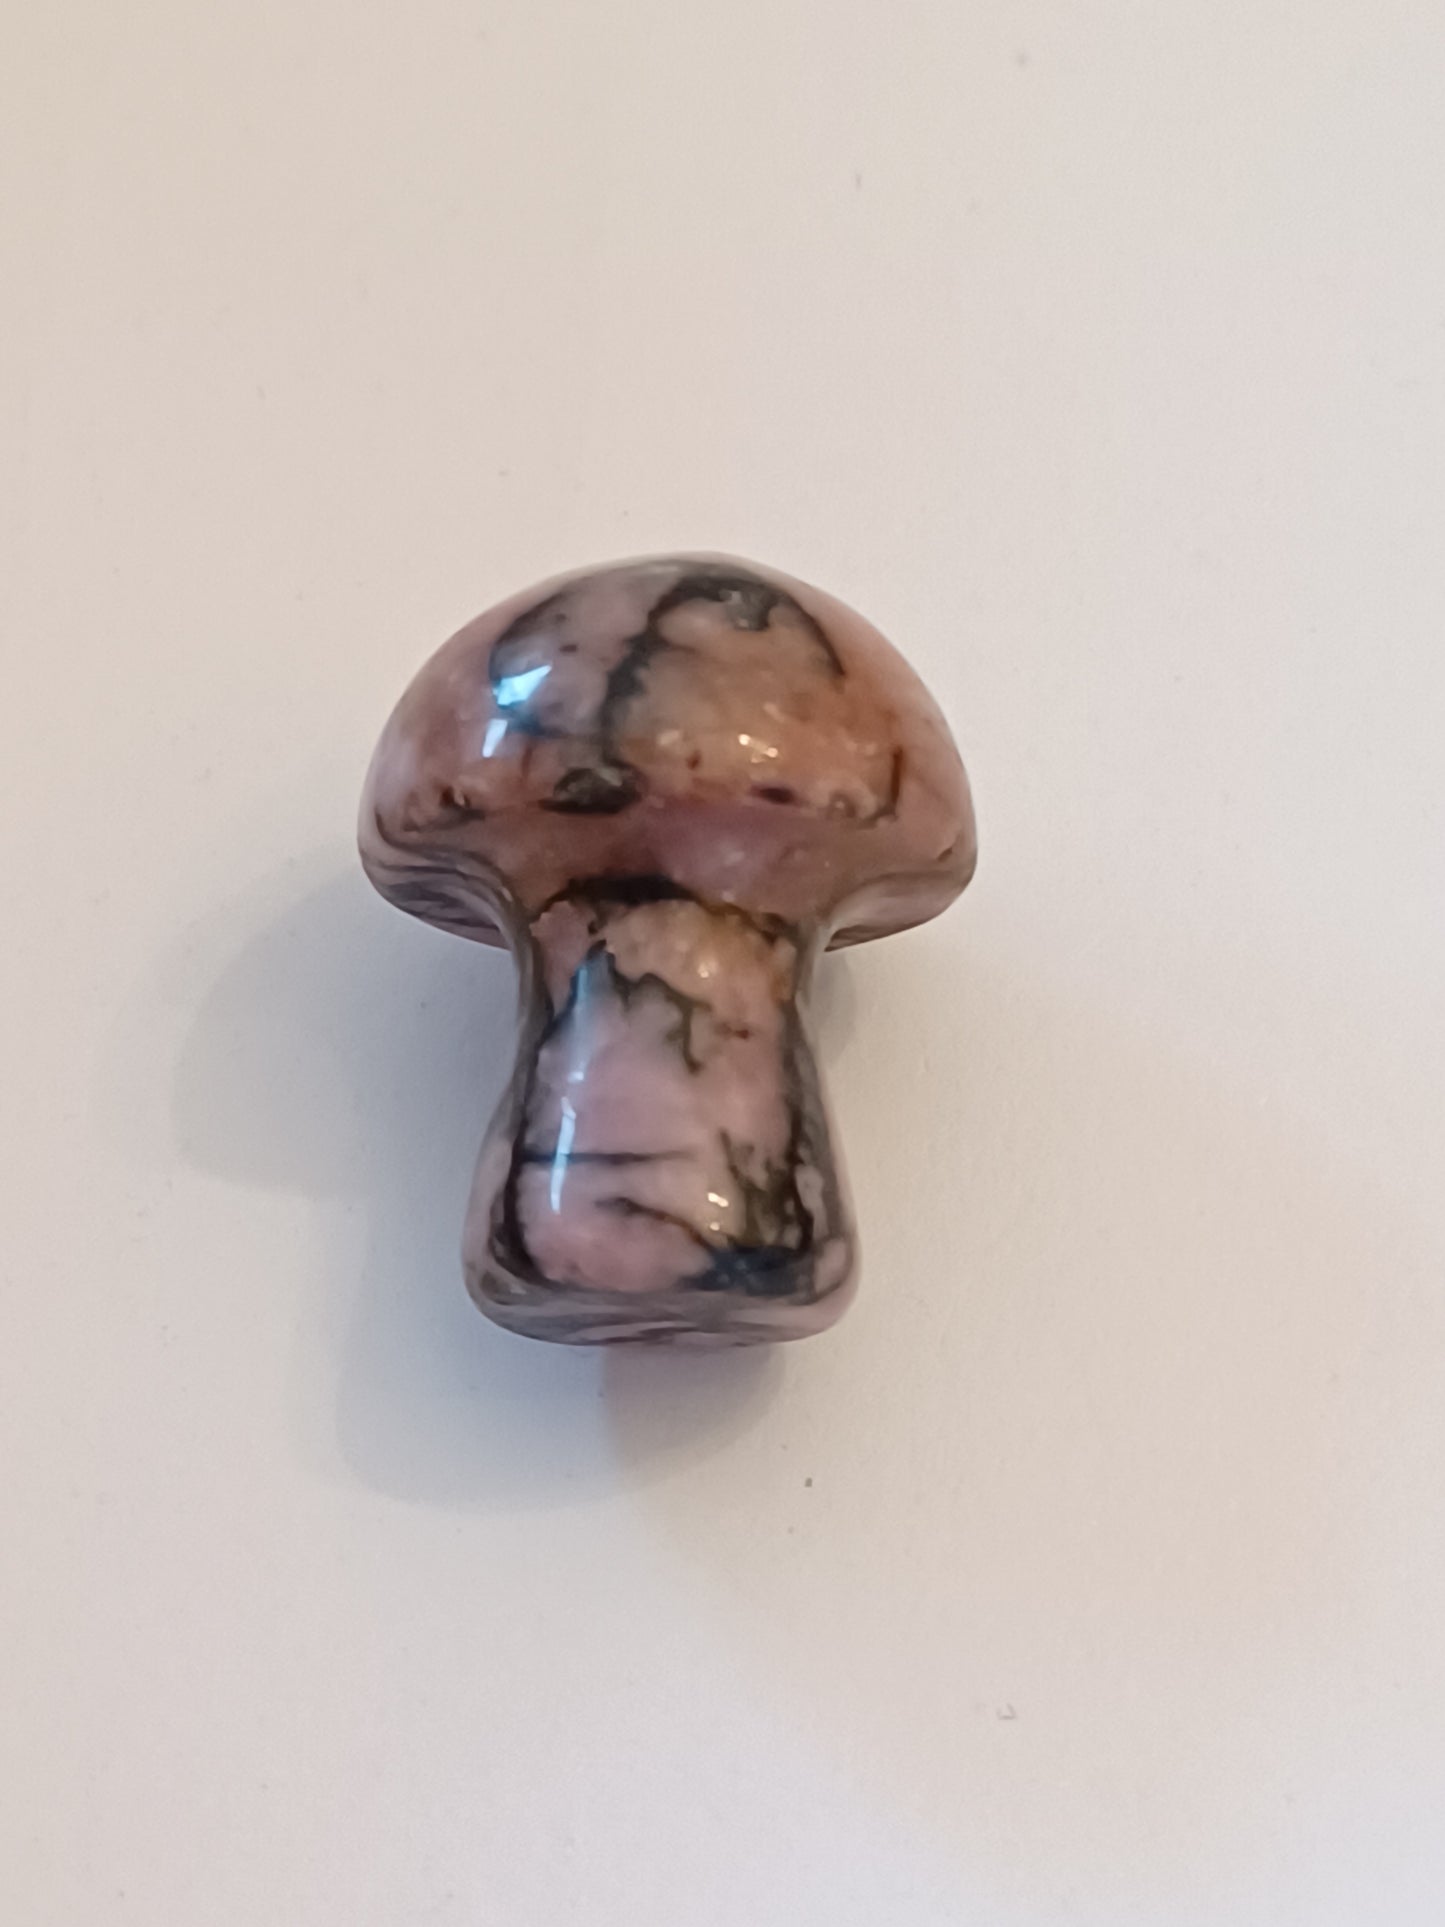 Little Mushrooms (1 Piece)